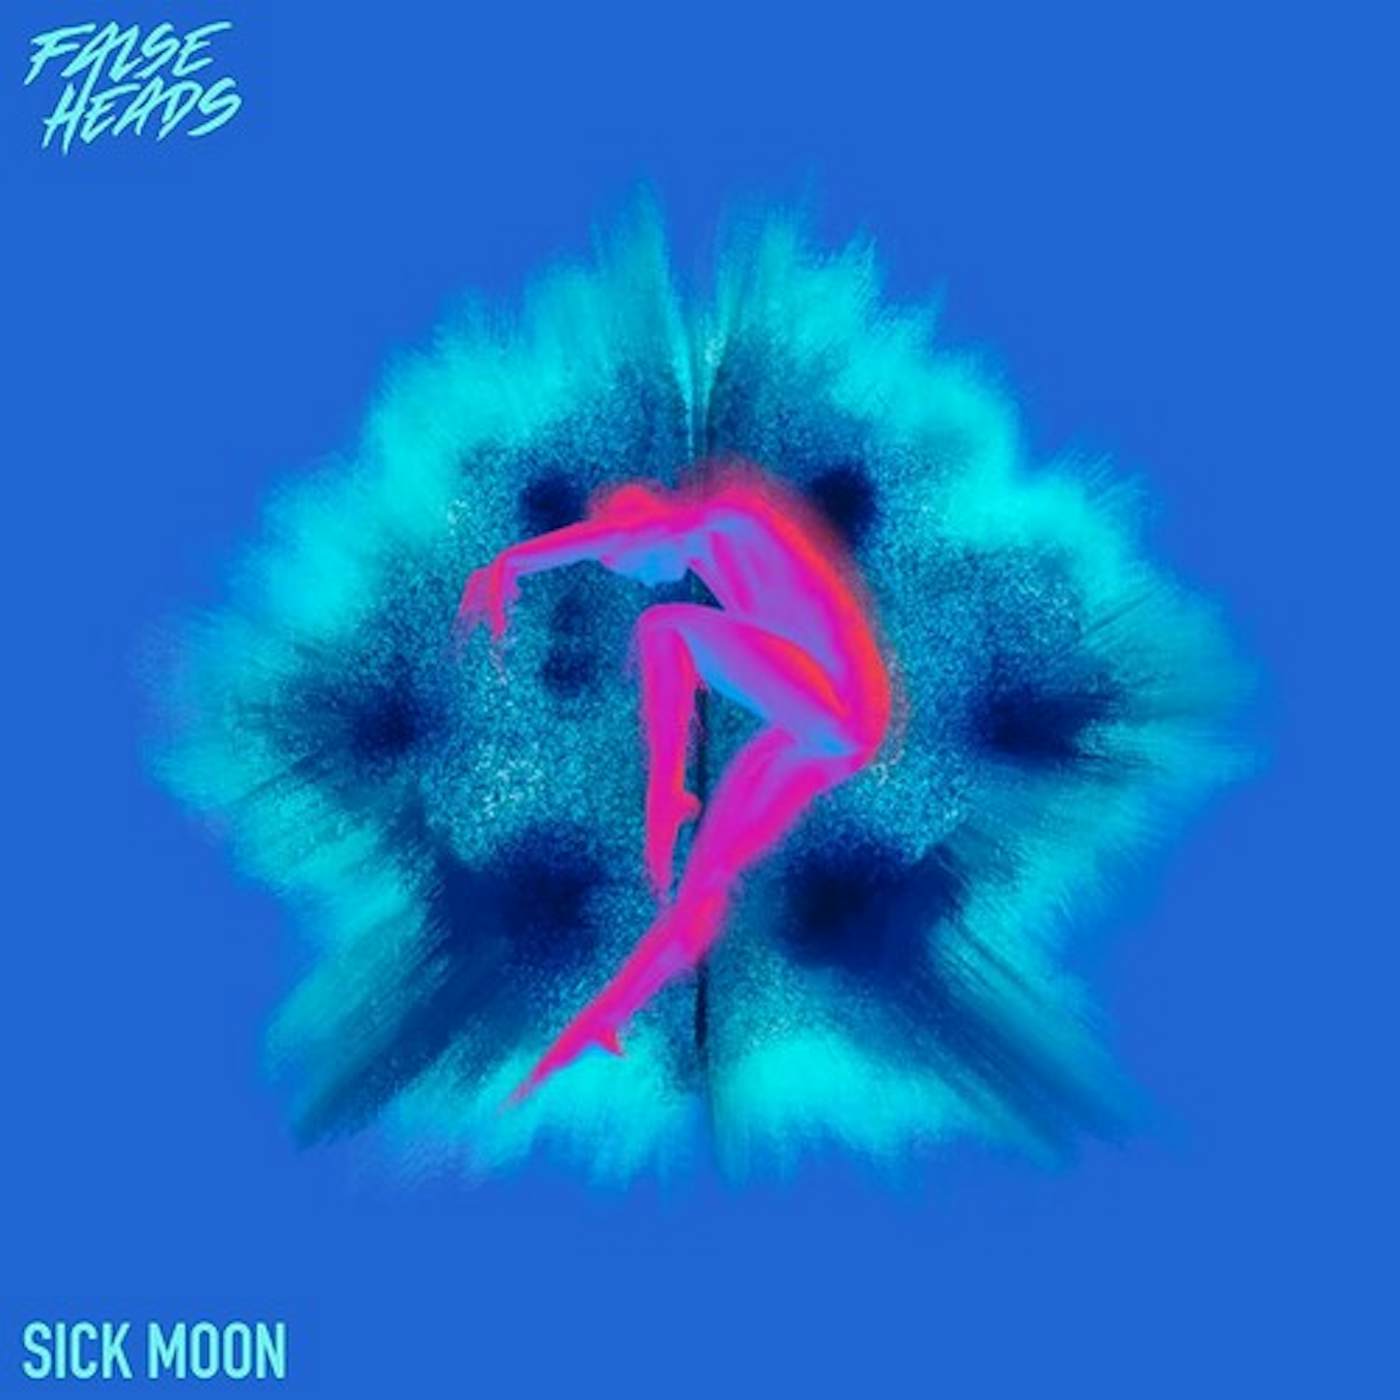 False Heads Sick Moon Vinyl Record